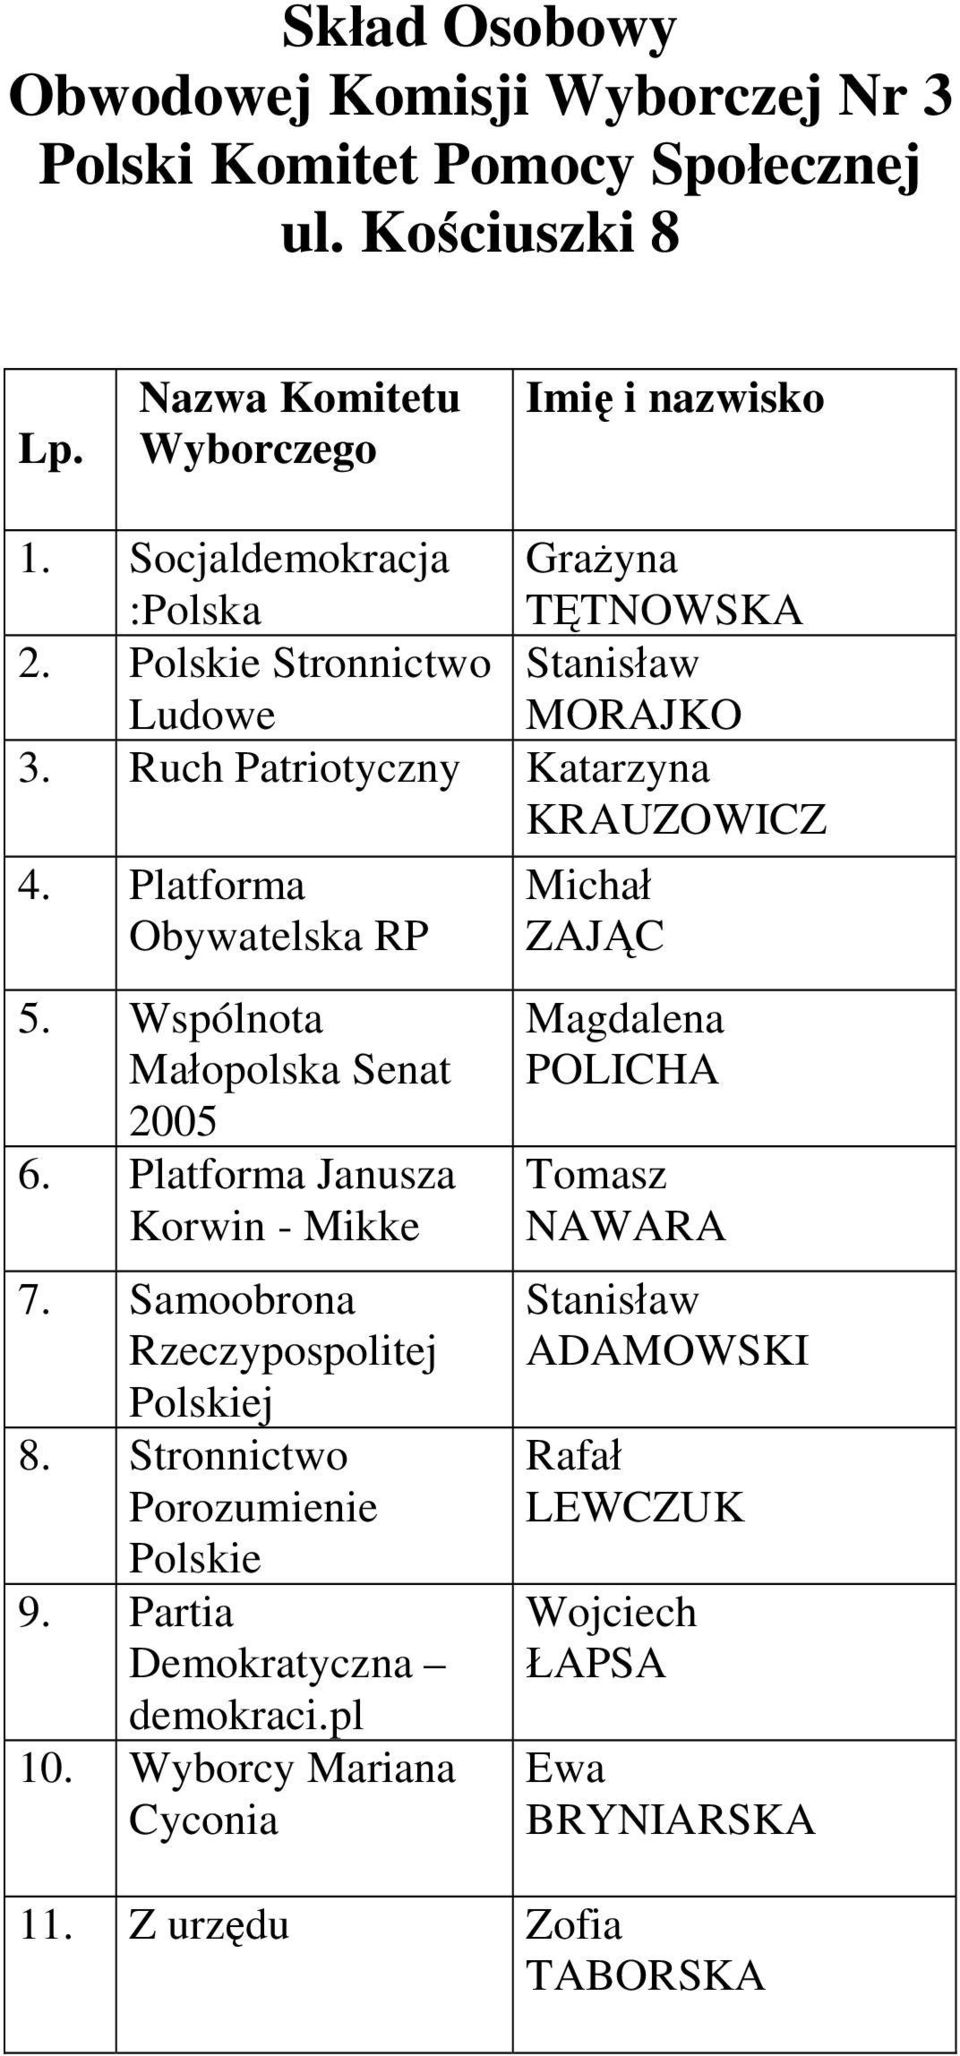 Platforma Janusza Korwin - Mikke 7. Samoobrona 8. 9. Partia 10.